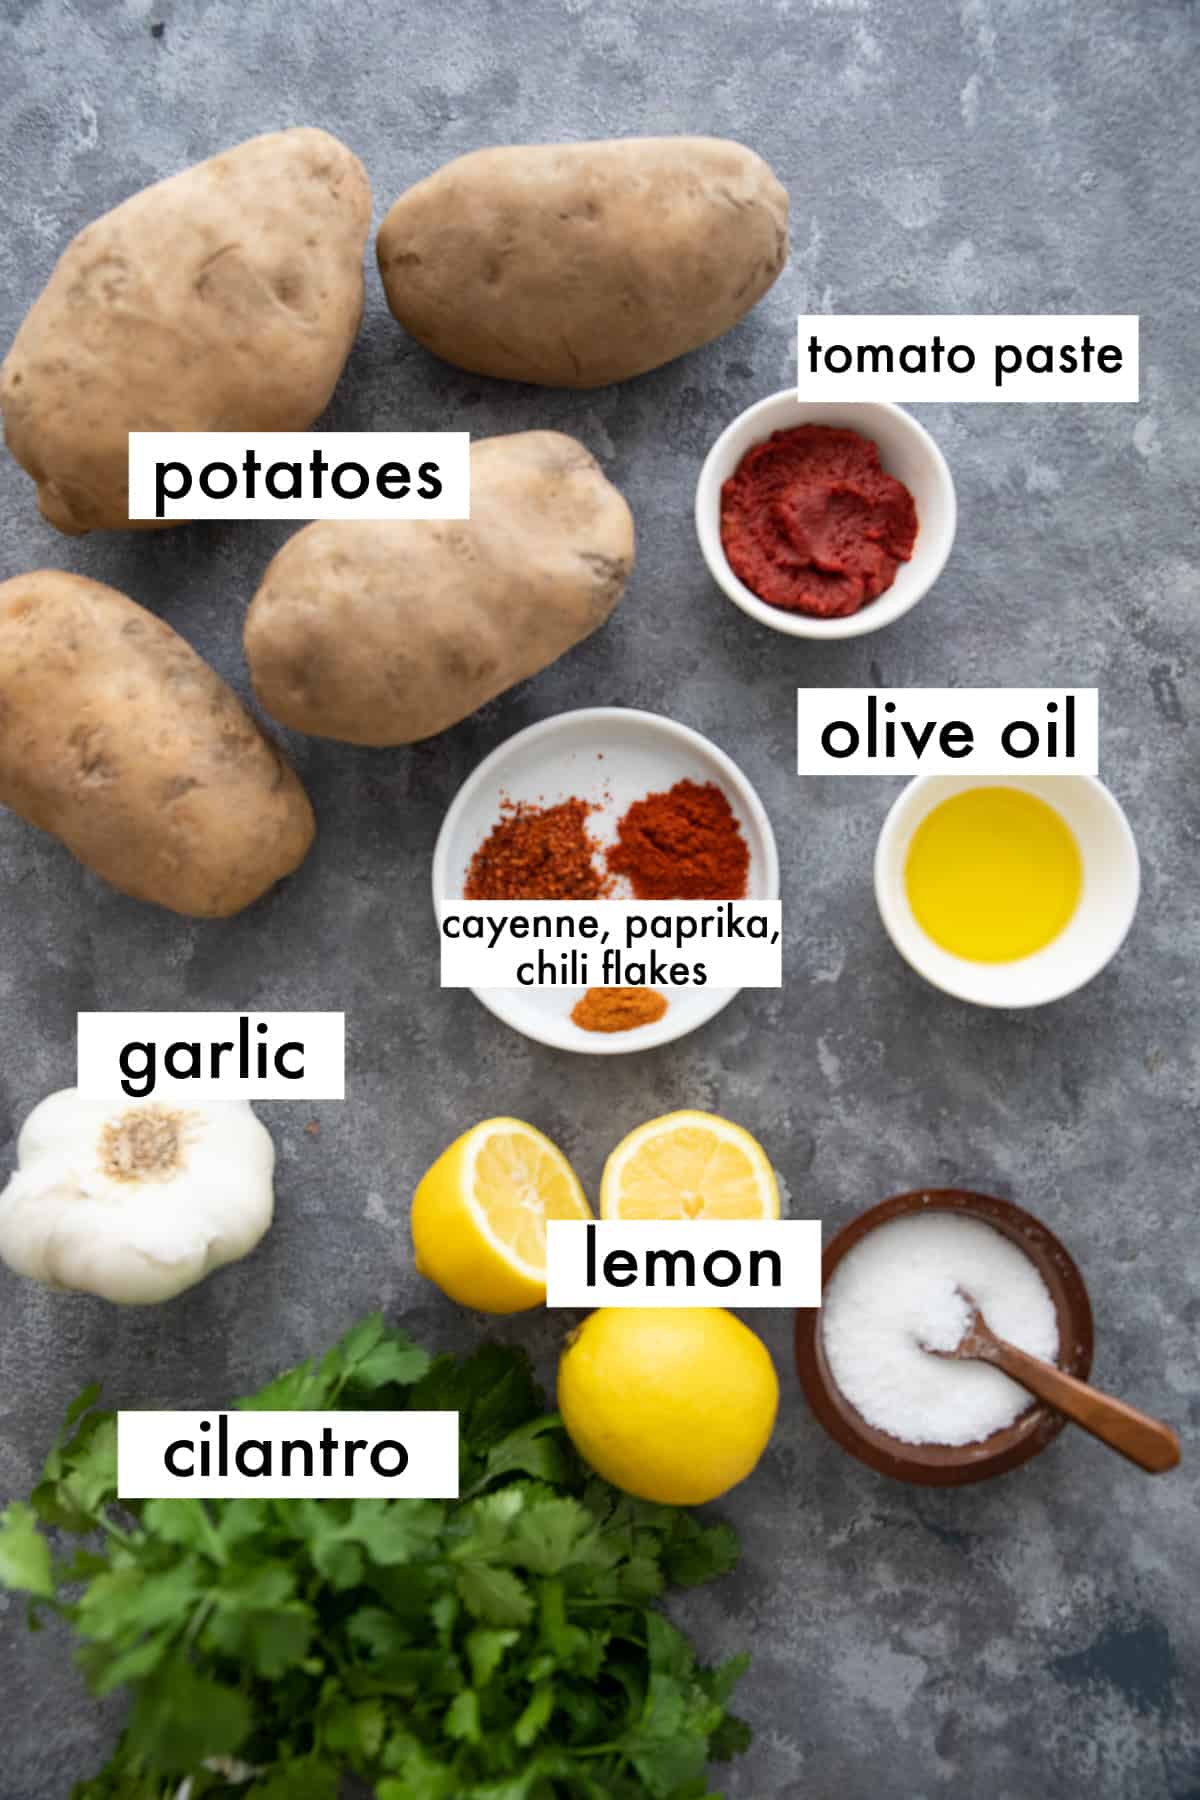 To make batata harra you need potatoes, spices, cilantro,olive oil and garlic. 